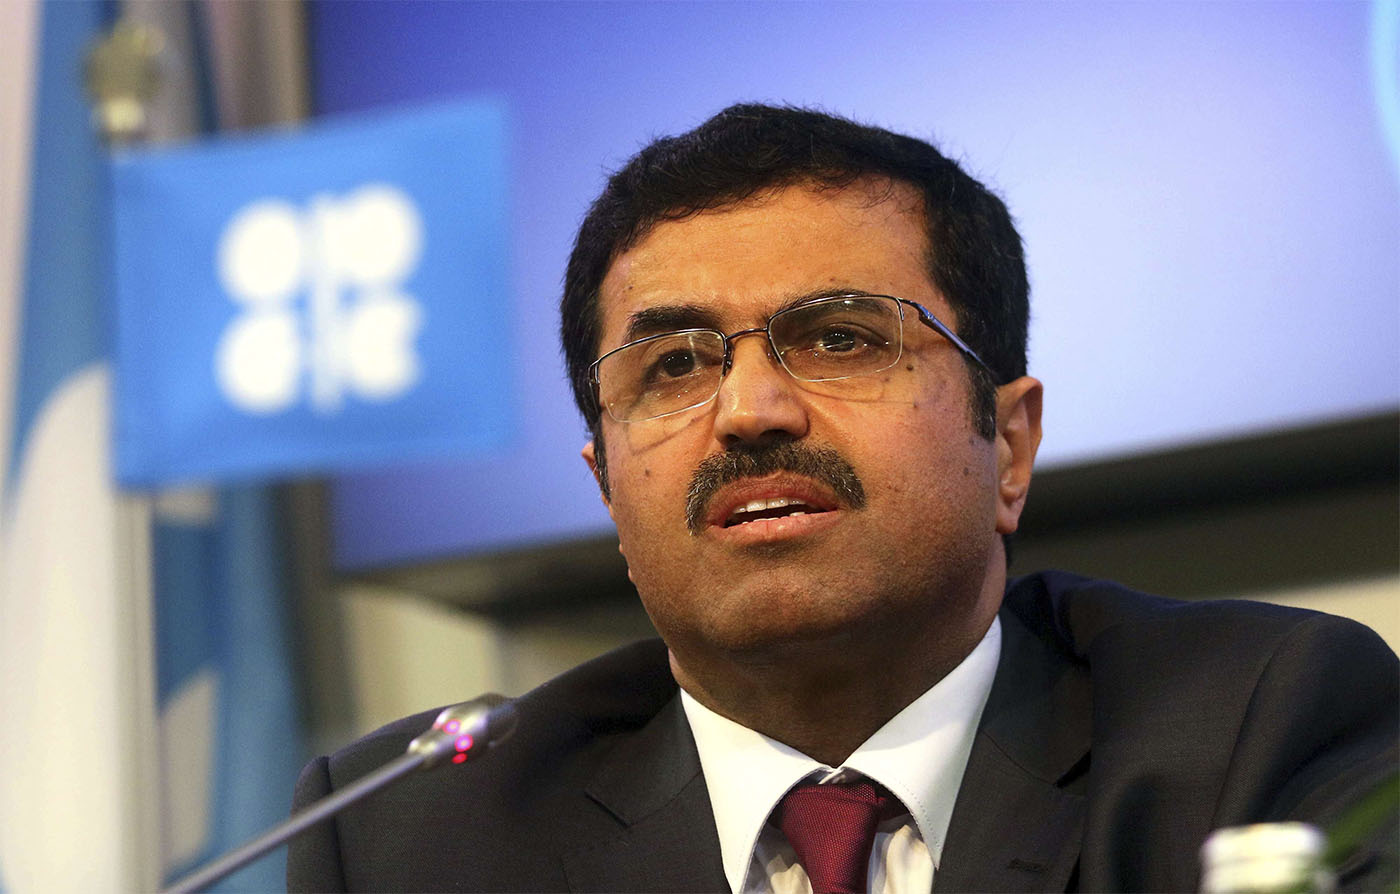 Qatar's Energy Minister Mohammed Bin Saleh Al-Sada